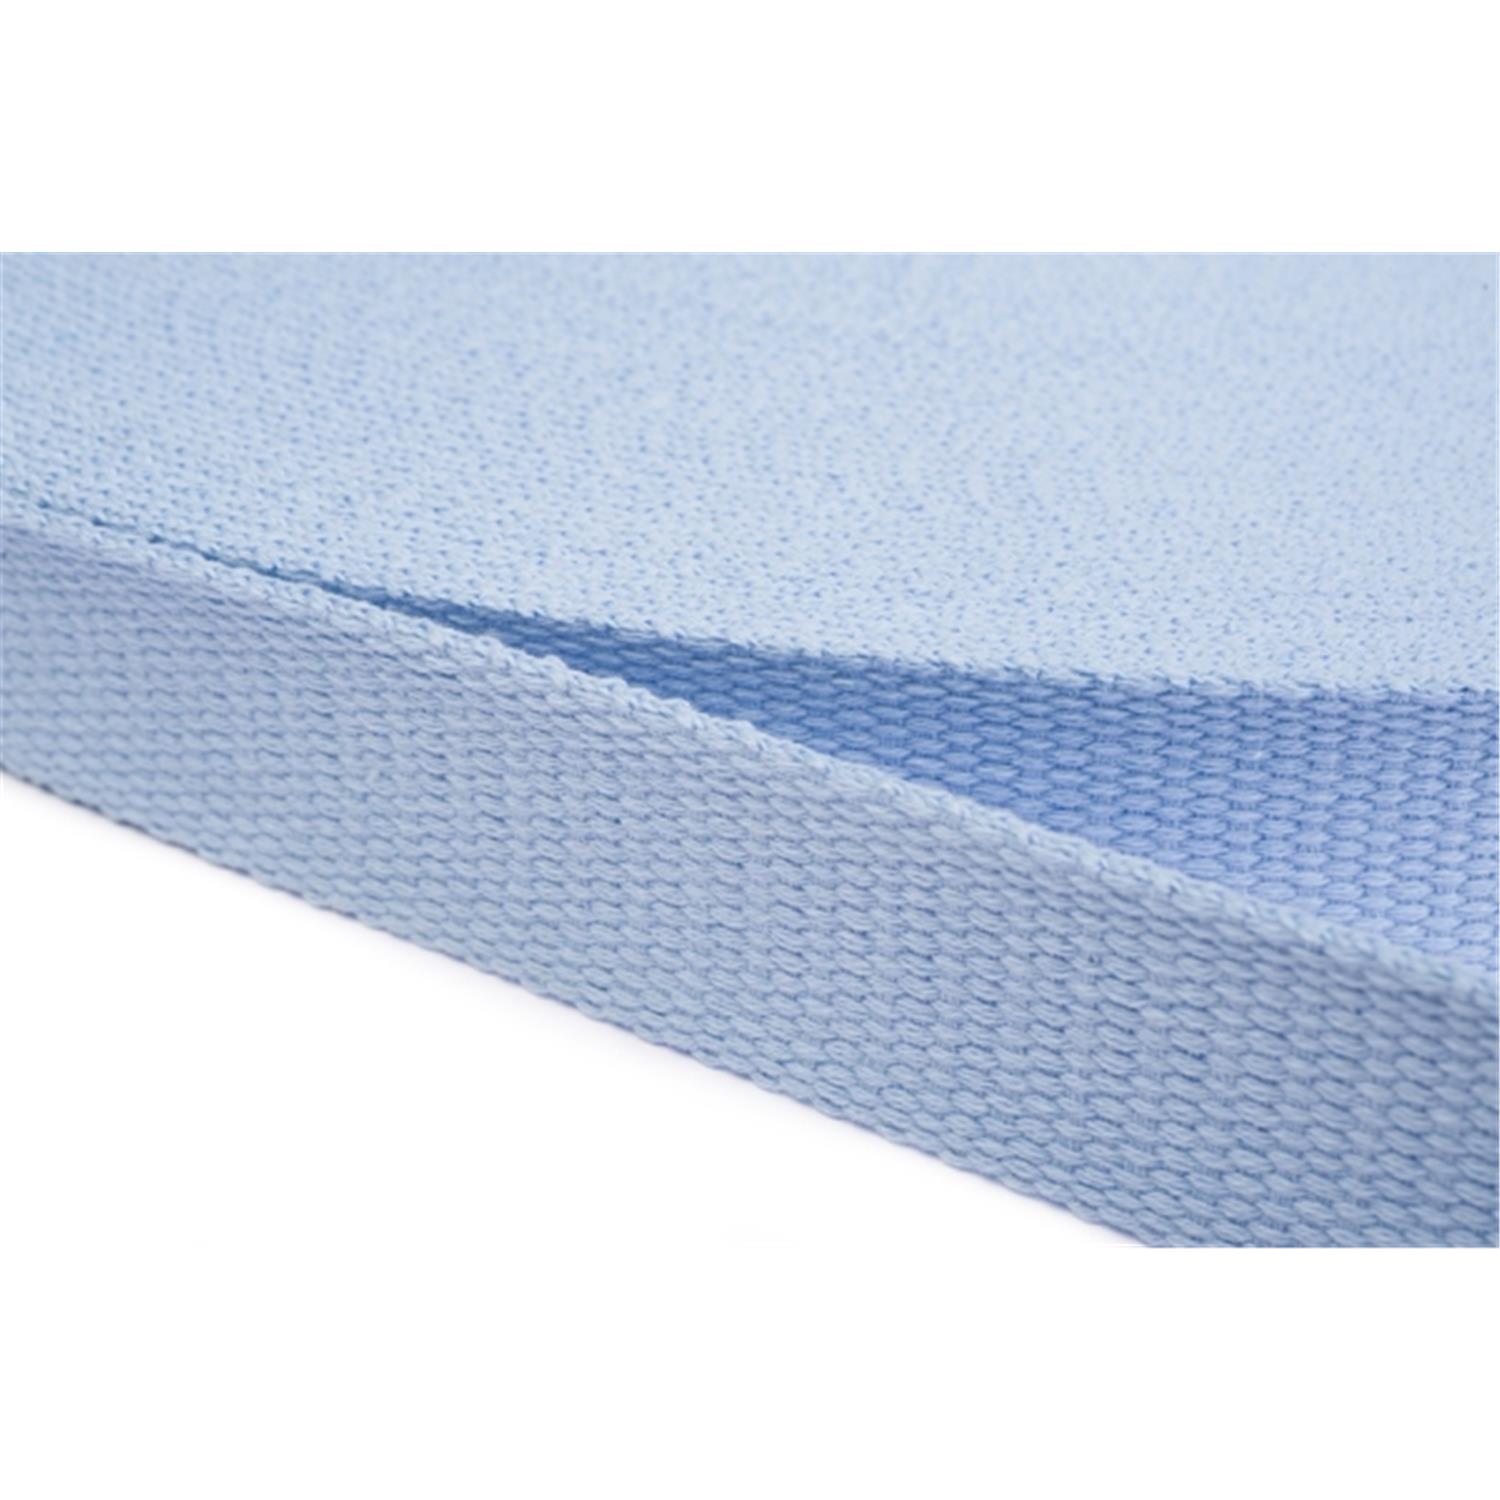 Gurtband aus Baumwolle 25mm in 20 Farben 11 - hellblau 6 Meter